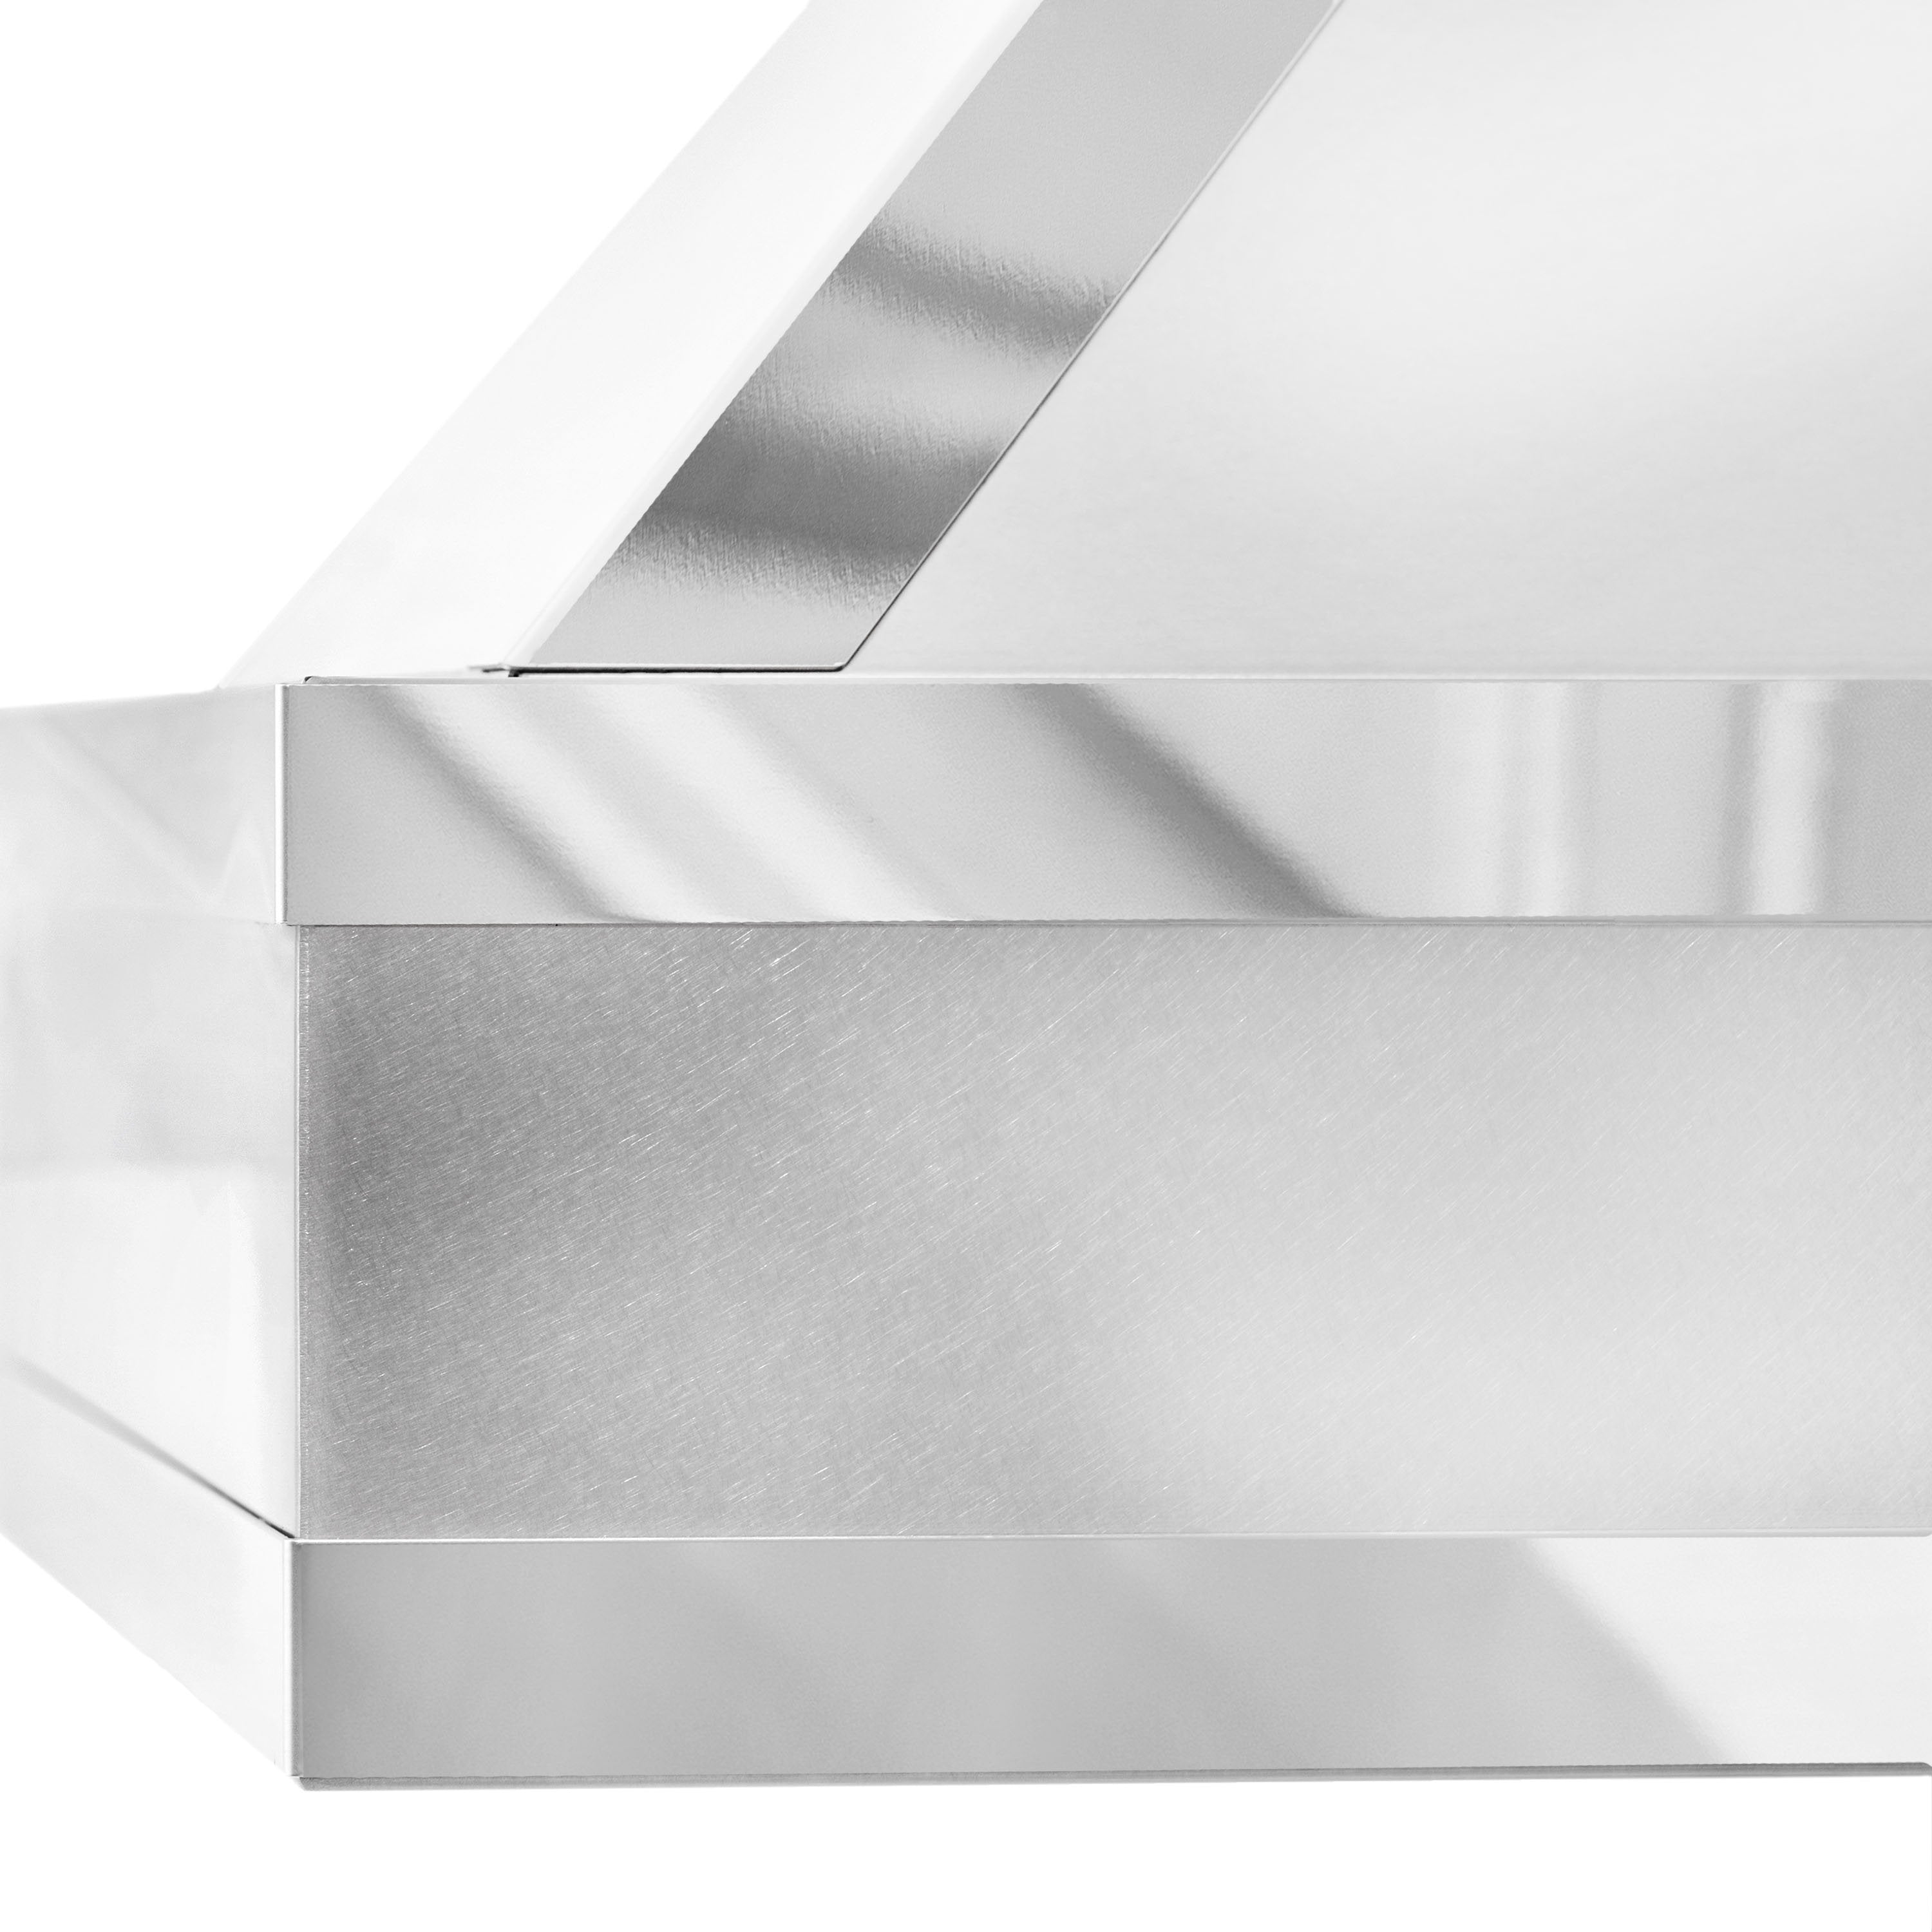 ZLINE Designer Series Wall Mount Range Hood in DuraSnow Stainless Steel with Mirror Accents (655MR) - New Star Living